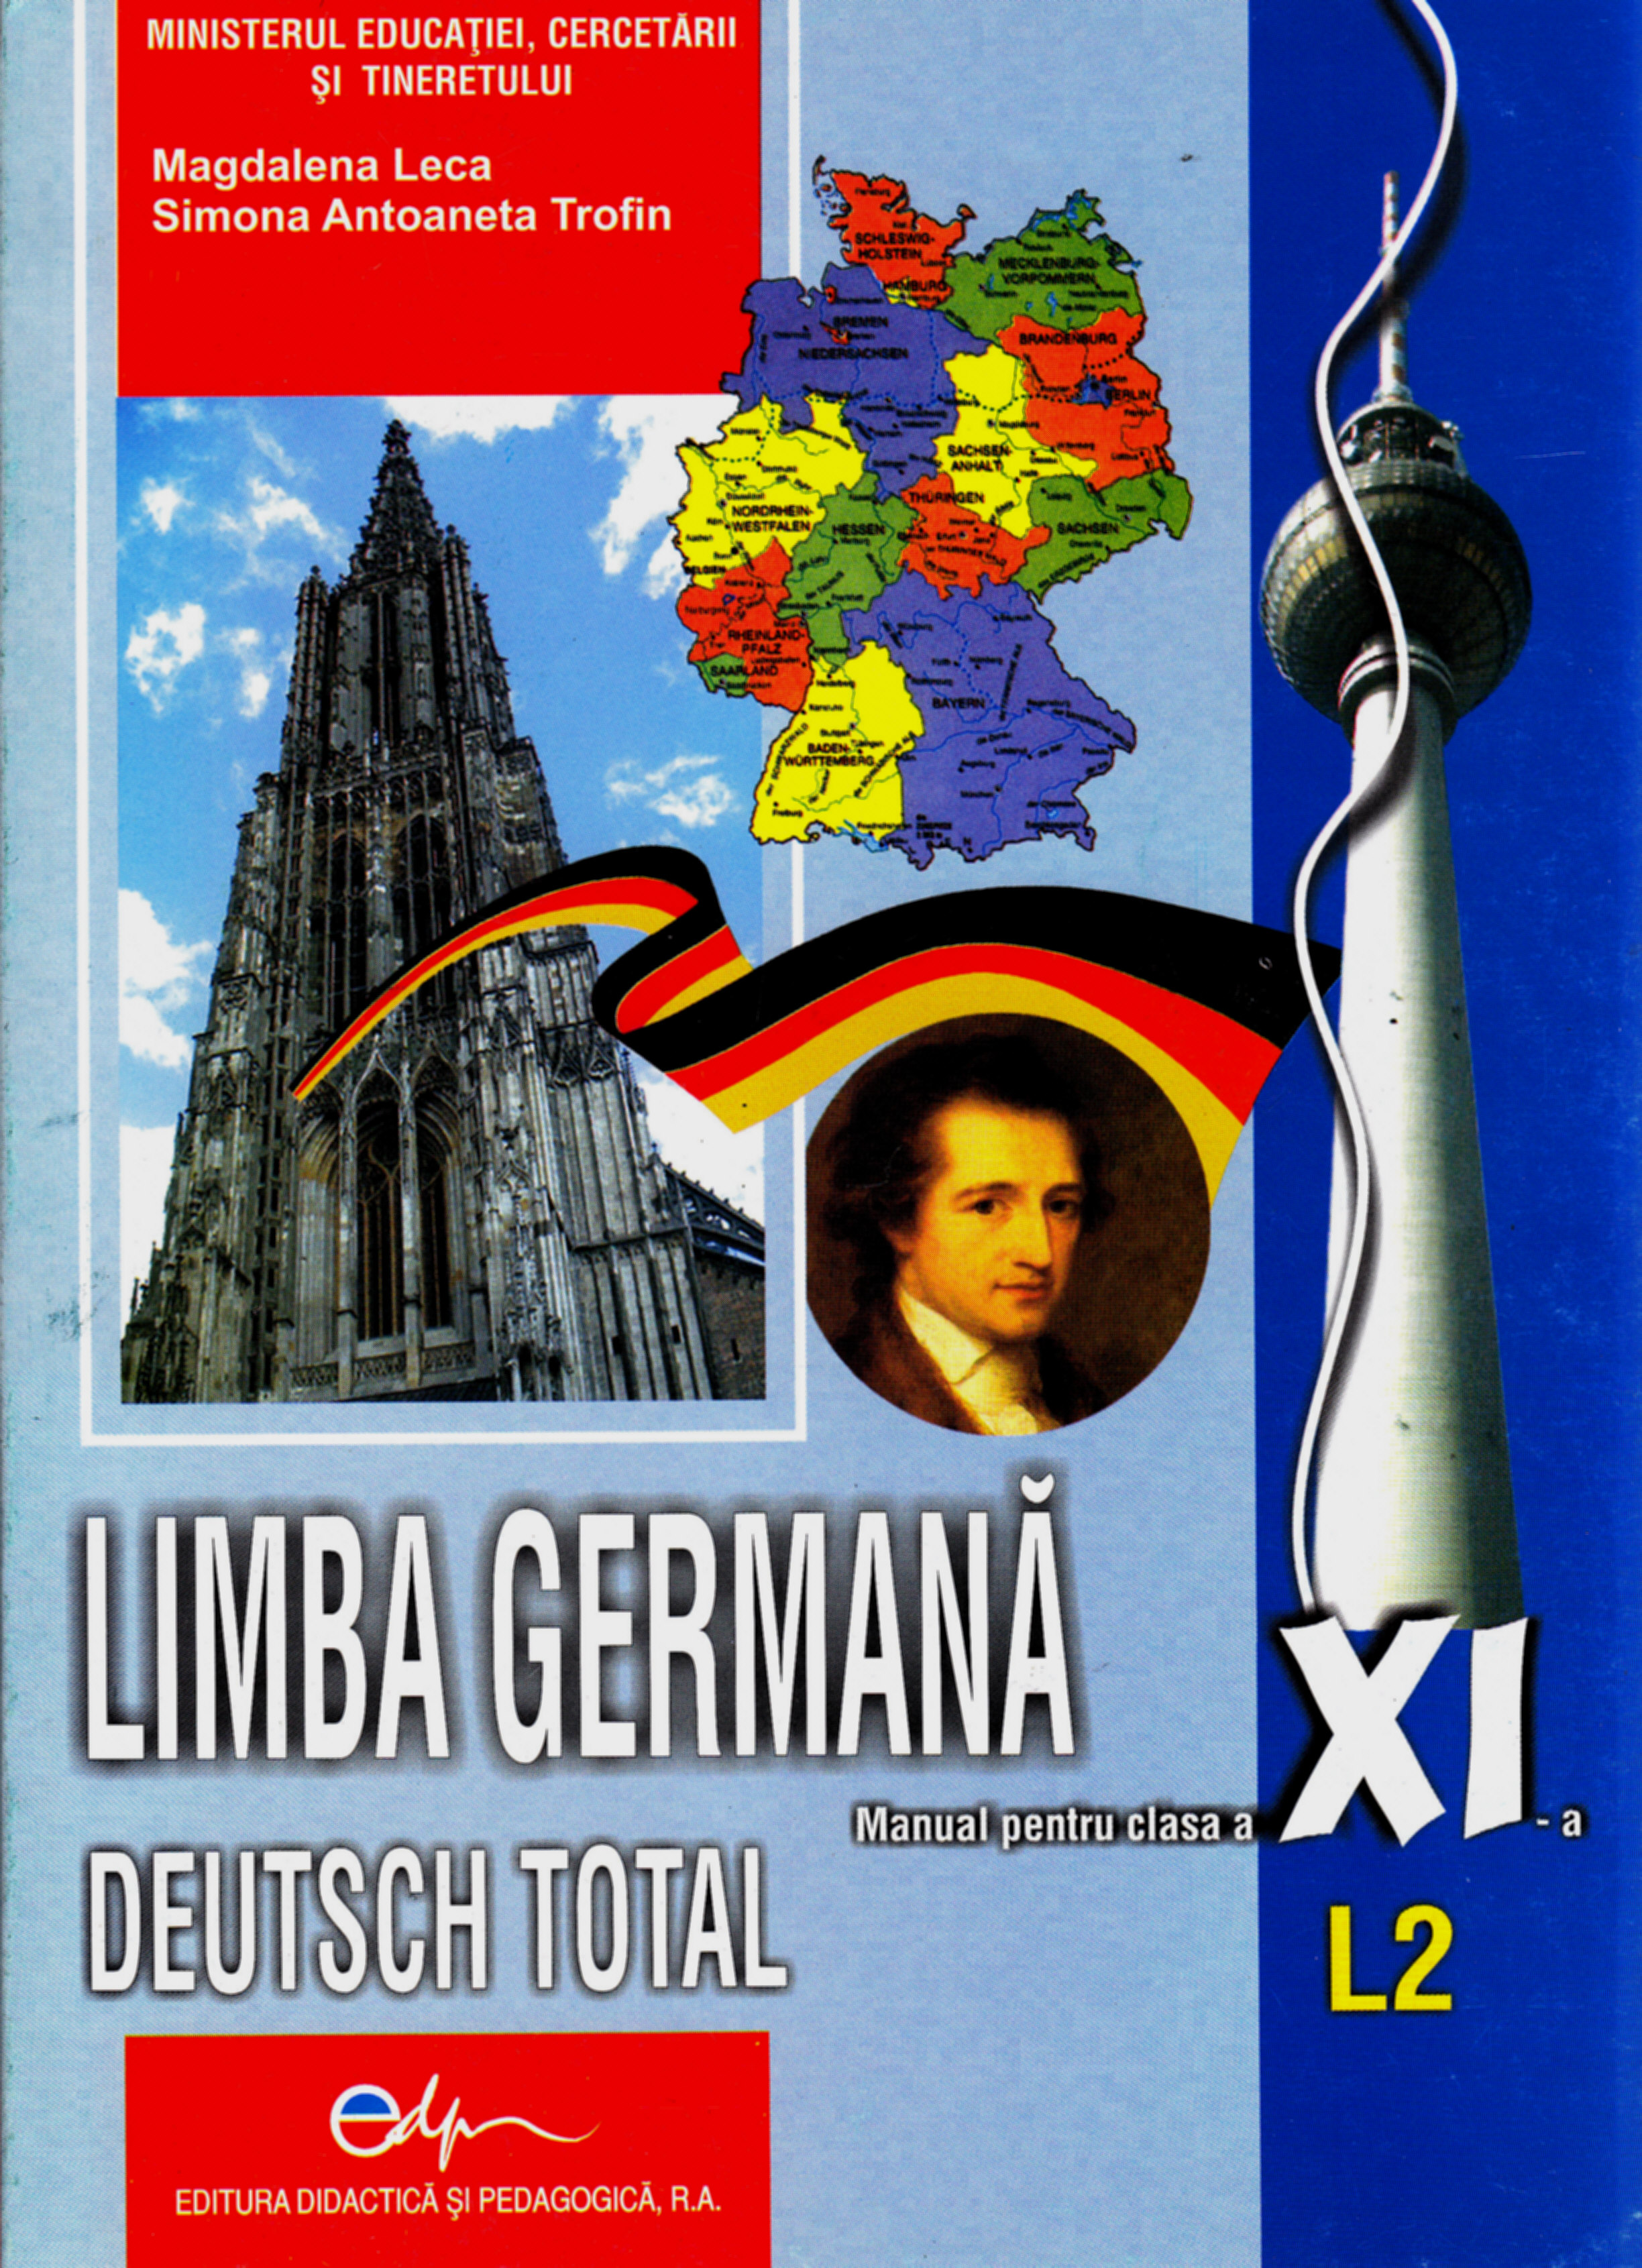 Germana Cls 11 L2 - Deutsch Total - Magdalena Leca, Simona Antoaneta Trofin